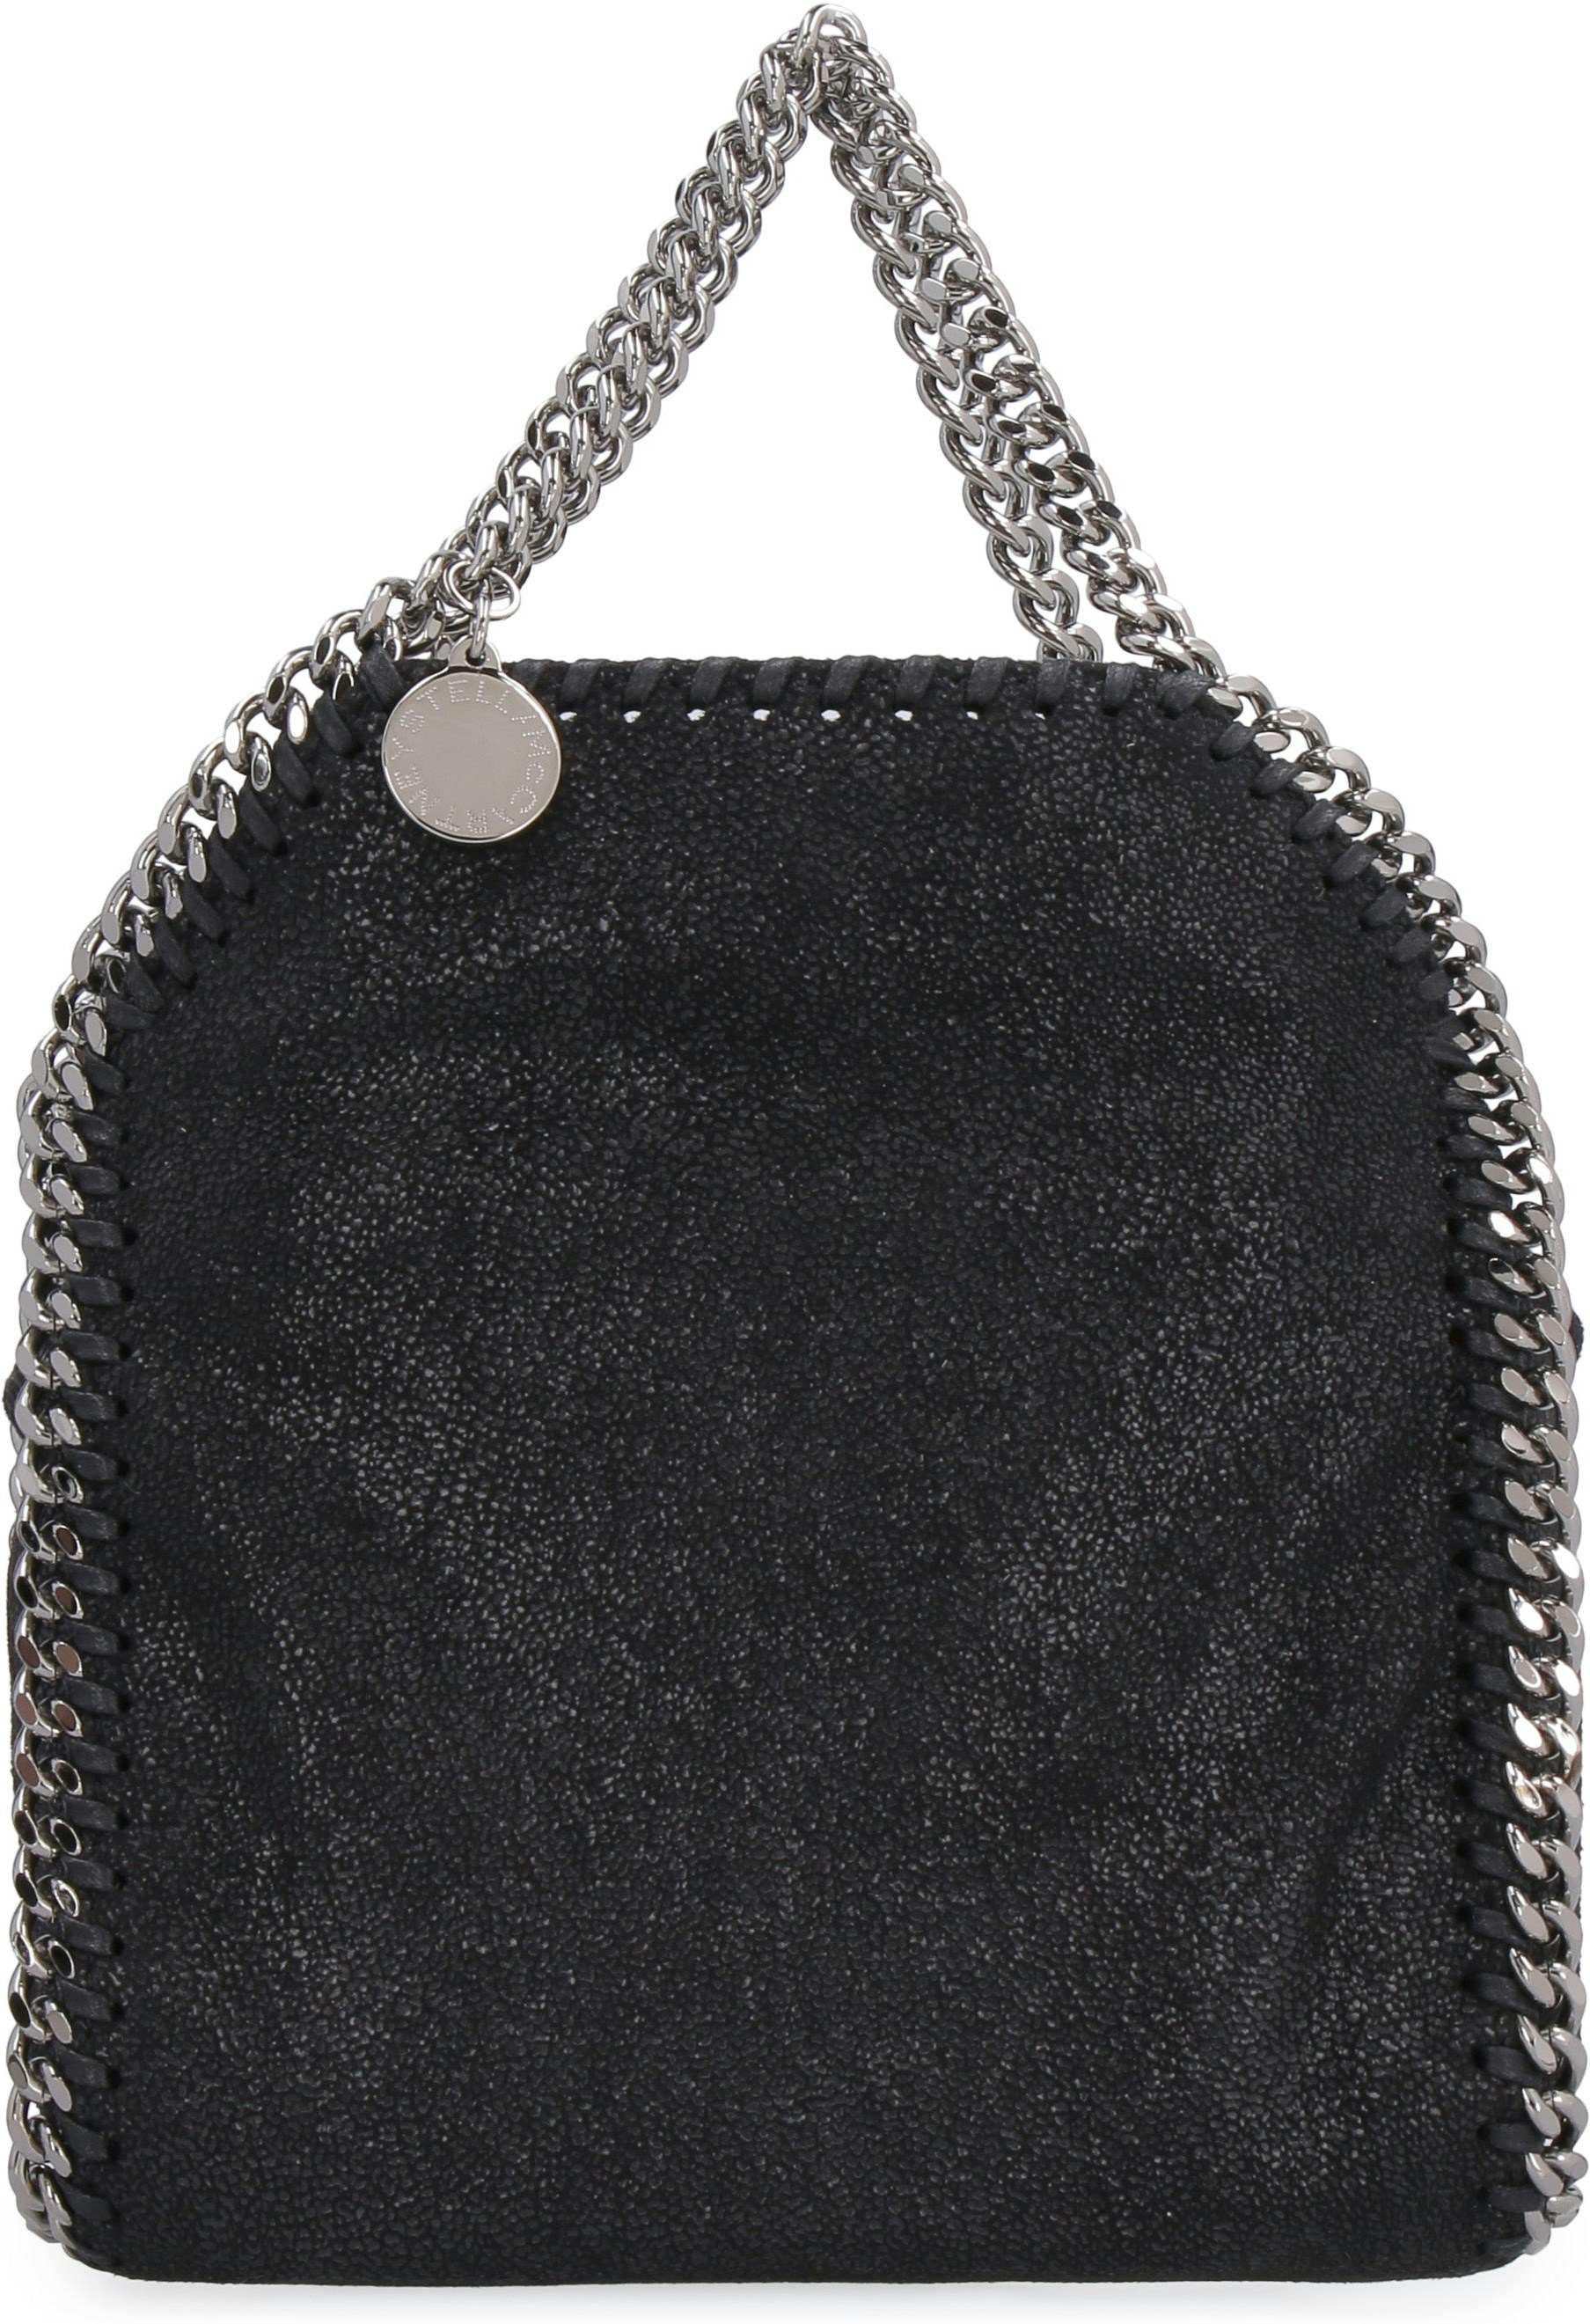 Authentic Stella McCartney Chain Edge Vegan Leather Crossbody Bag Black NEW